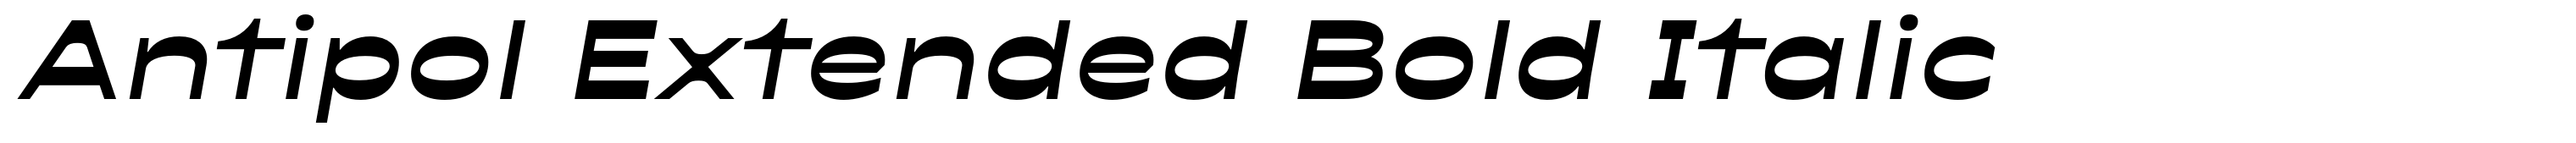 Antipol Extended Bold Italic